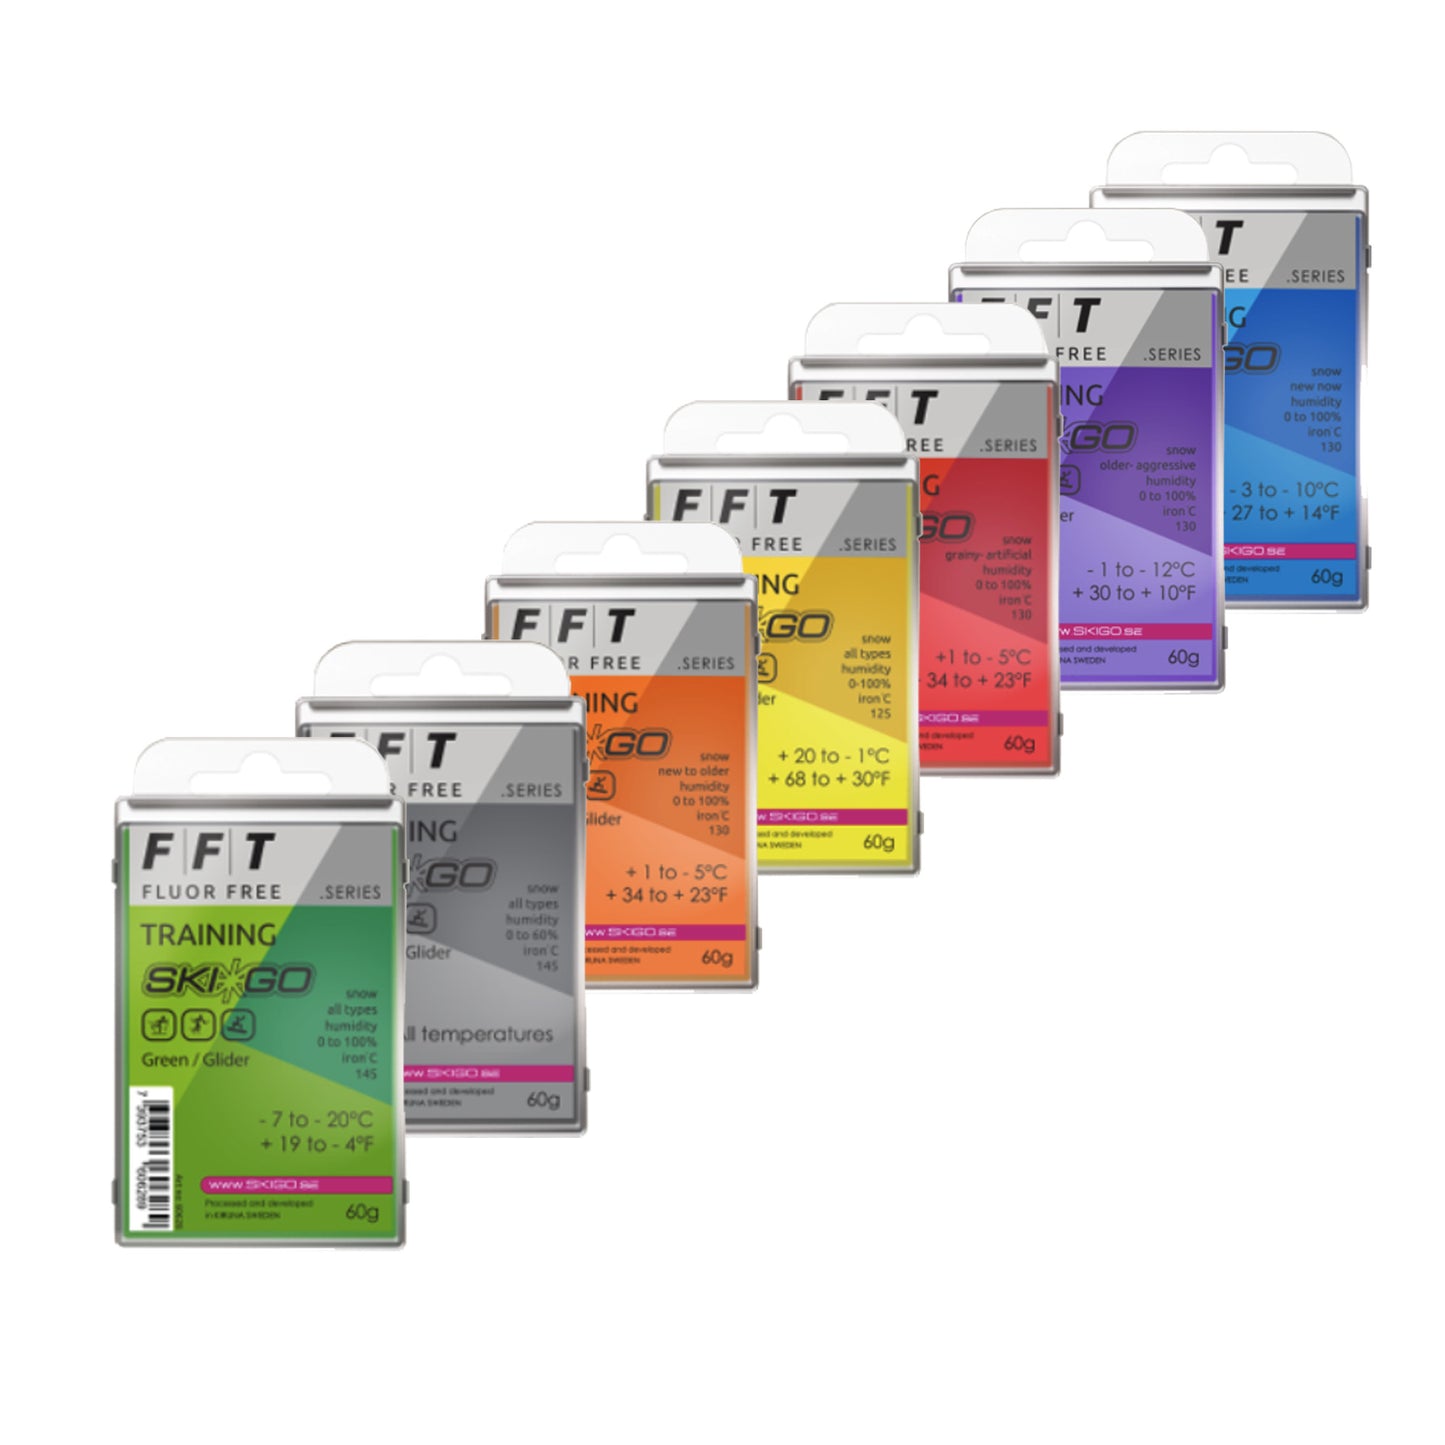 FFT vosk bez fluoru pro trénink